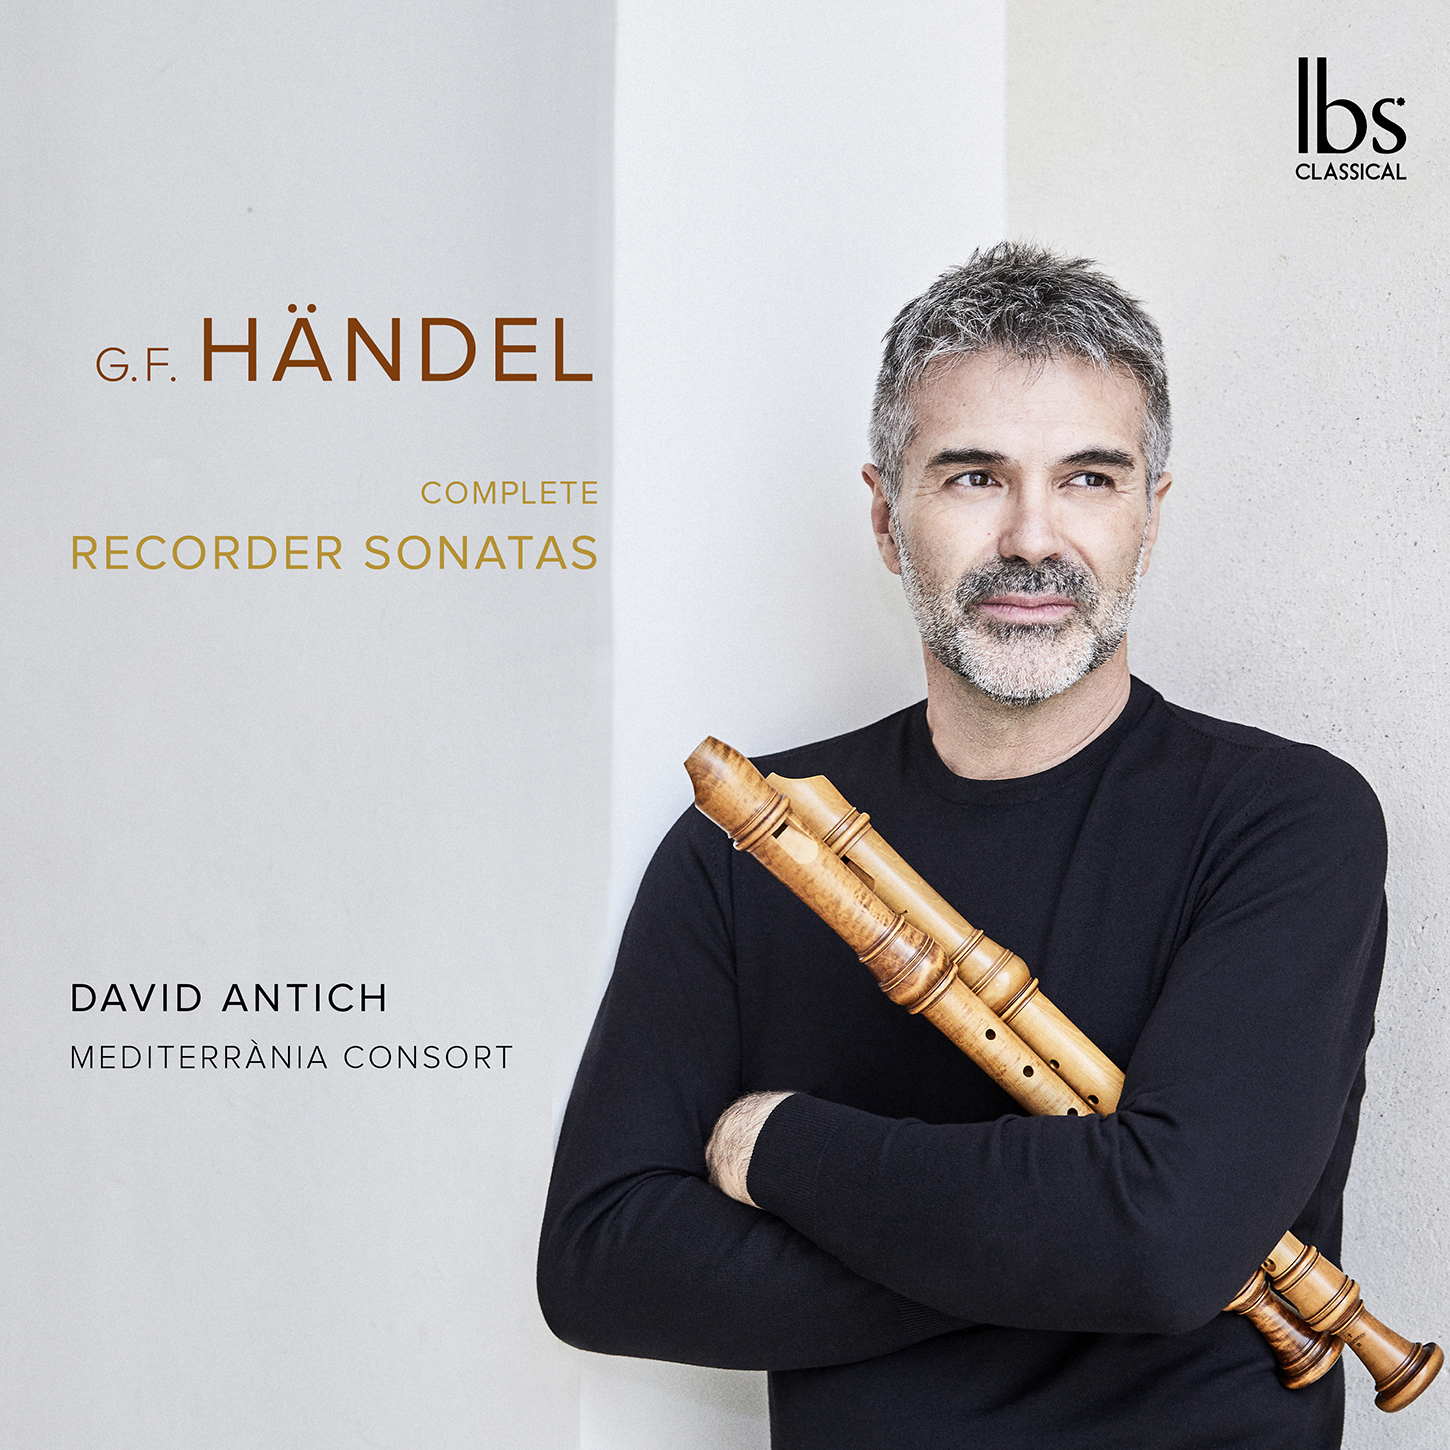 Handel: Complete Recorder Sonatas / Mediterrània Consort, Antich